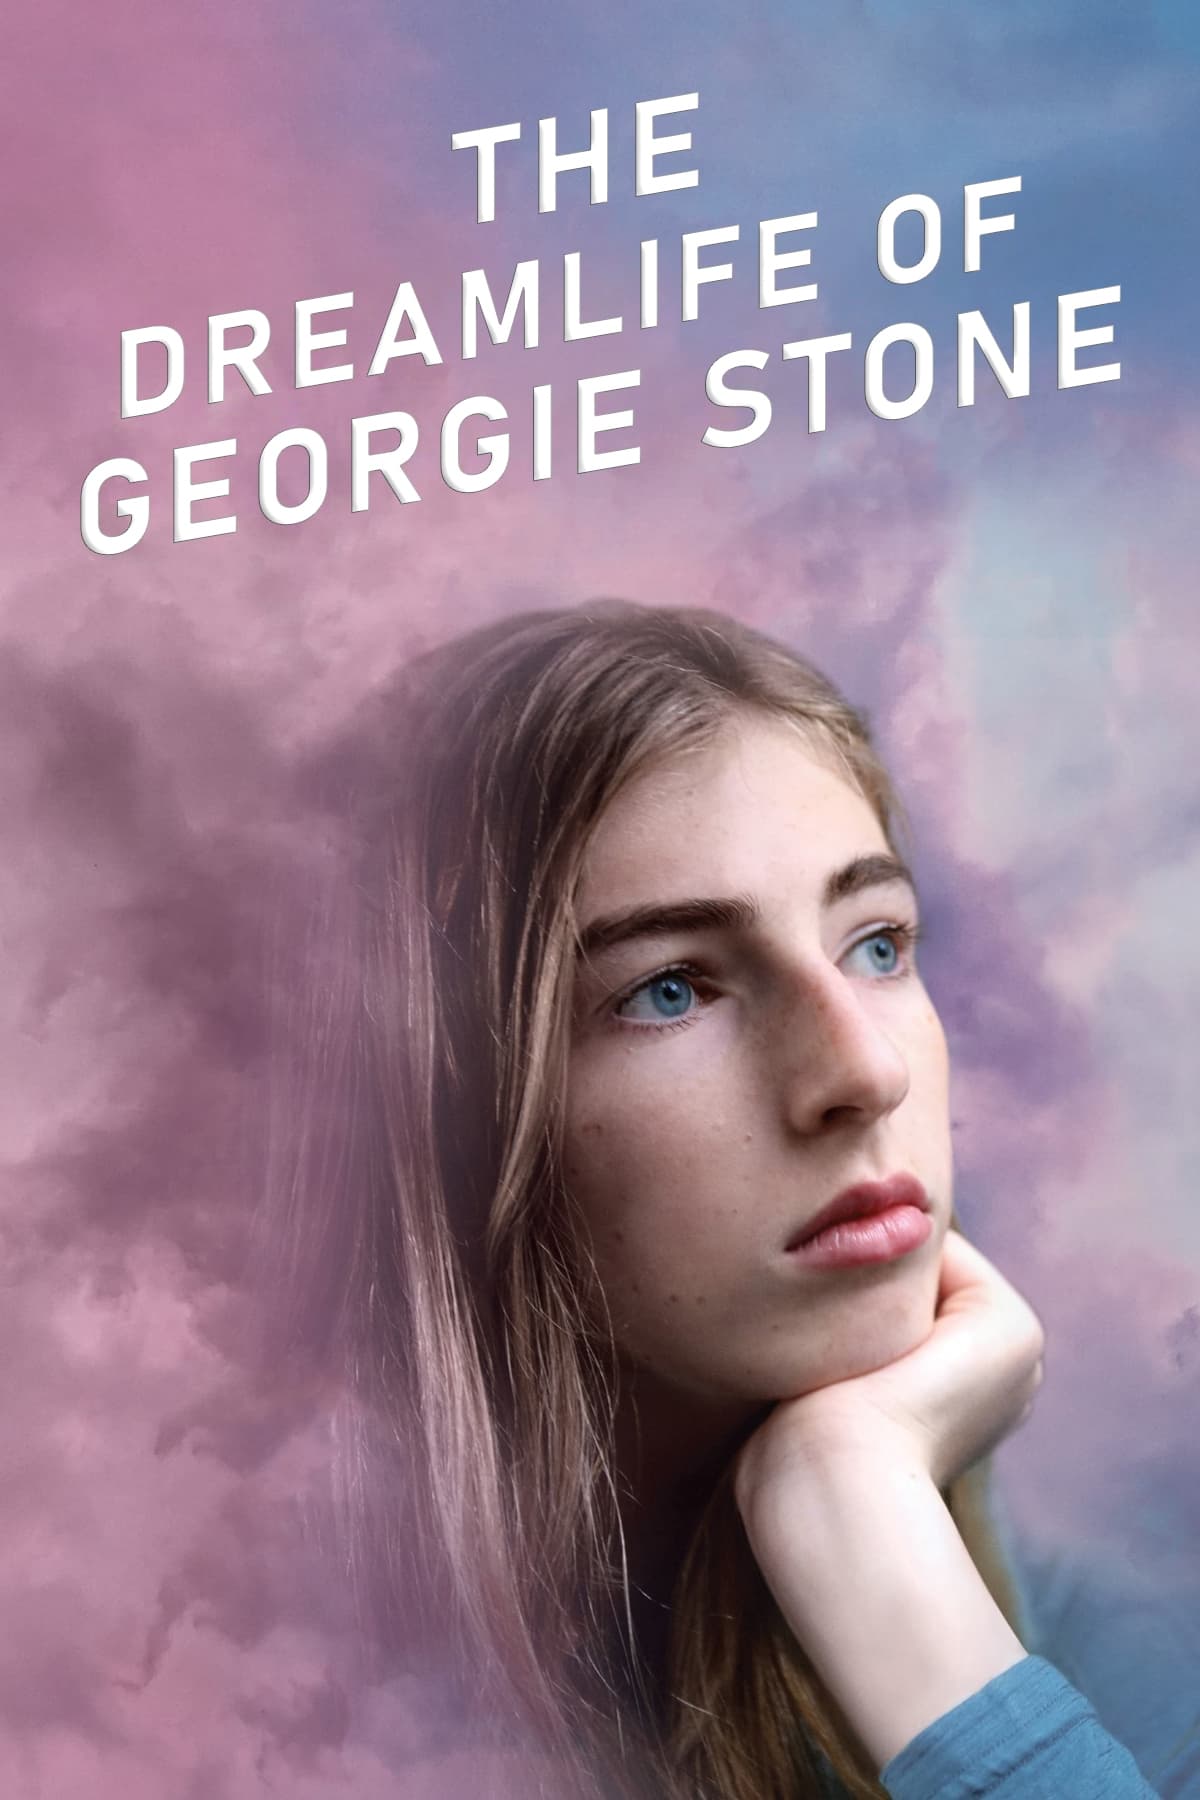 Banner Phim Cuộc sống trong mơ của Georgie Stone (The Dreamlife of Georgie Stone)